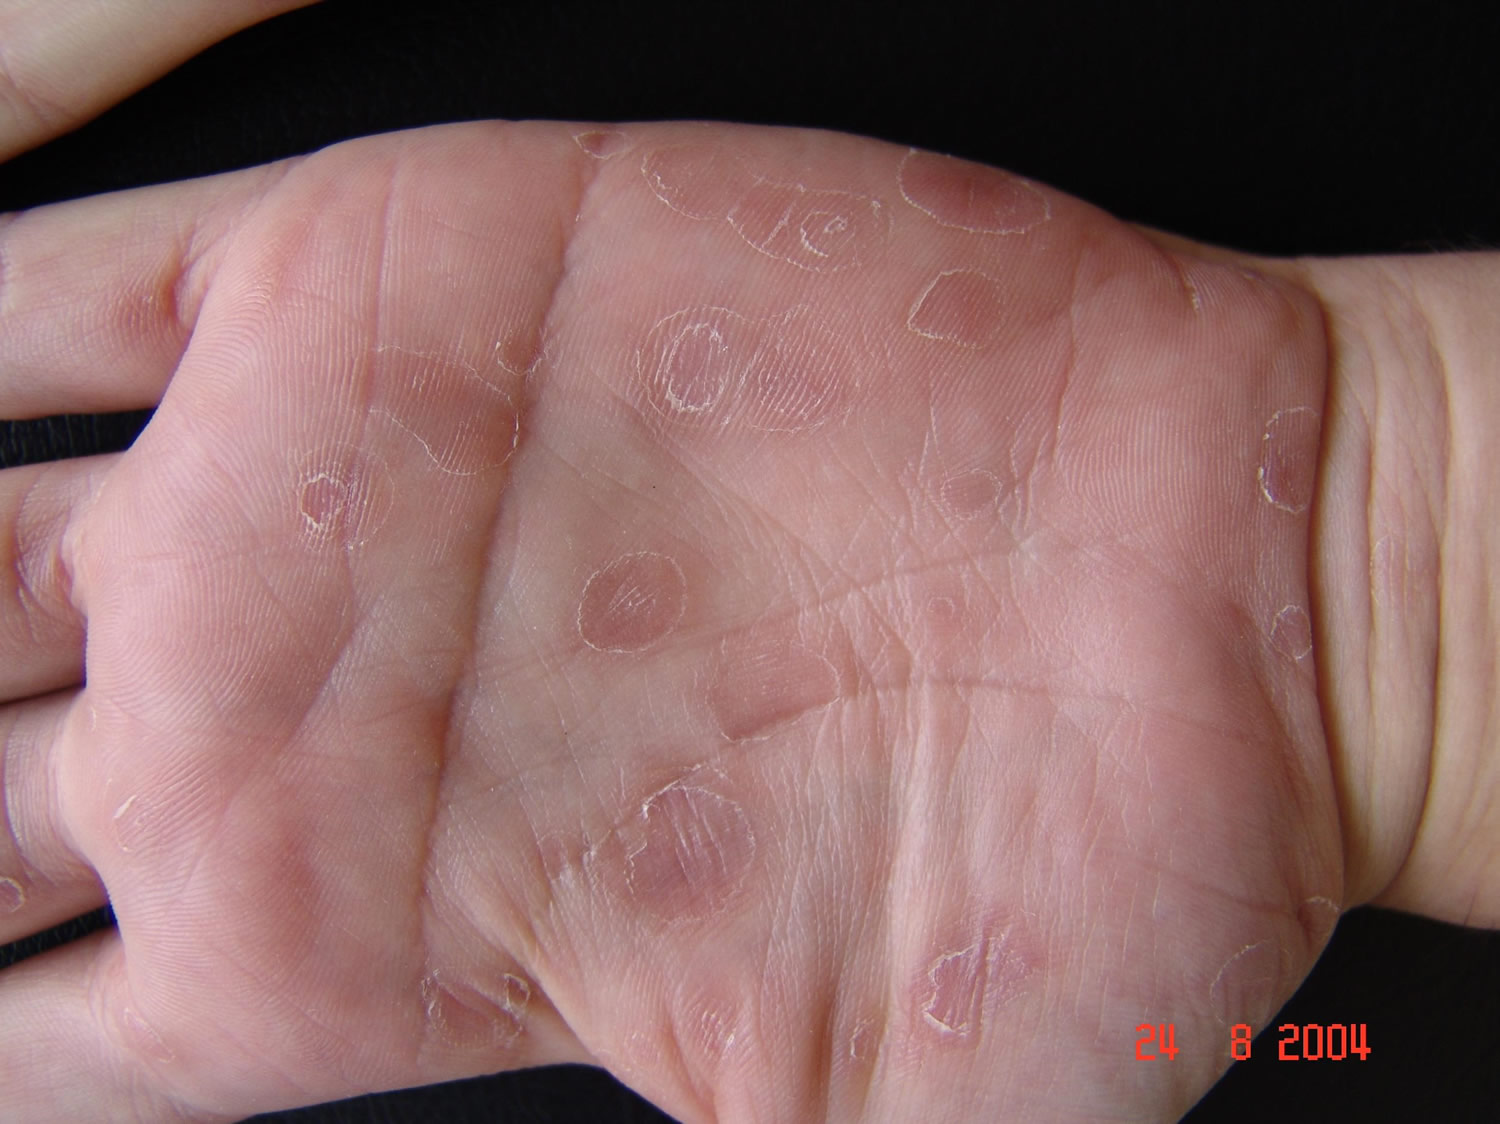 Secondary syphilis hand rash